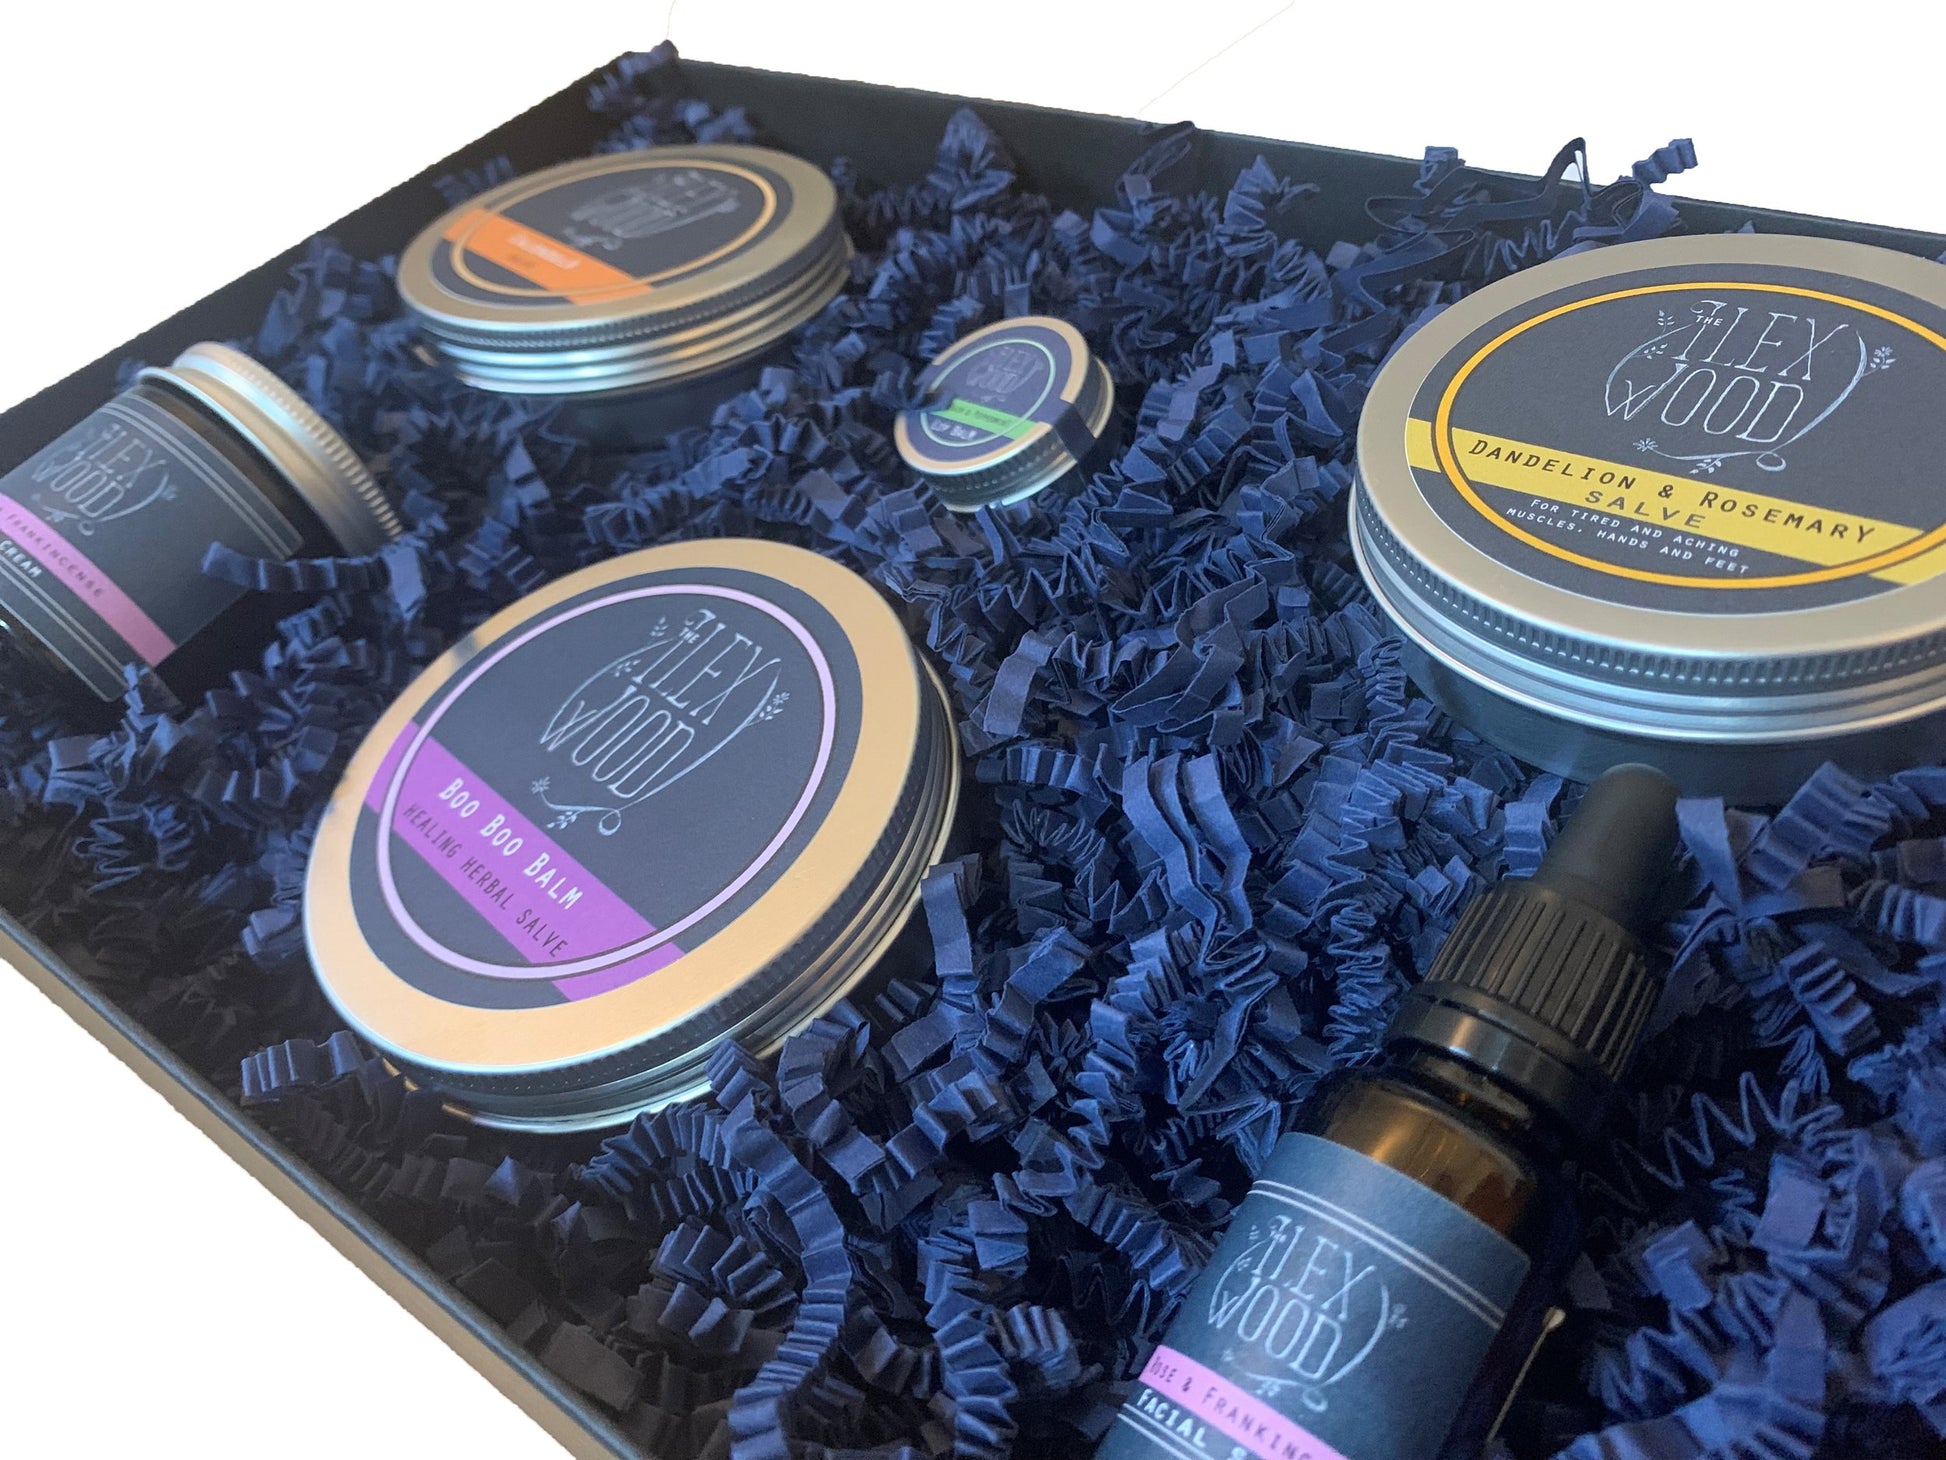 The Ultimate Natural Vegan Skin Care Beauty Gift Box